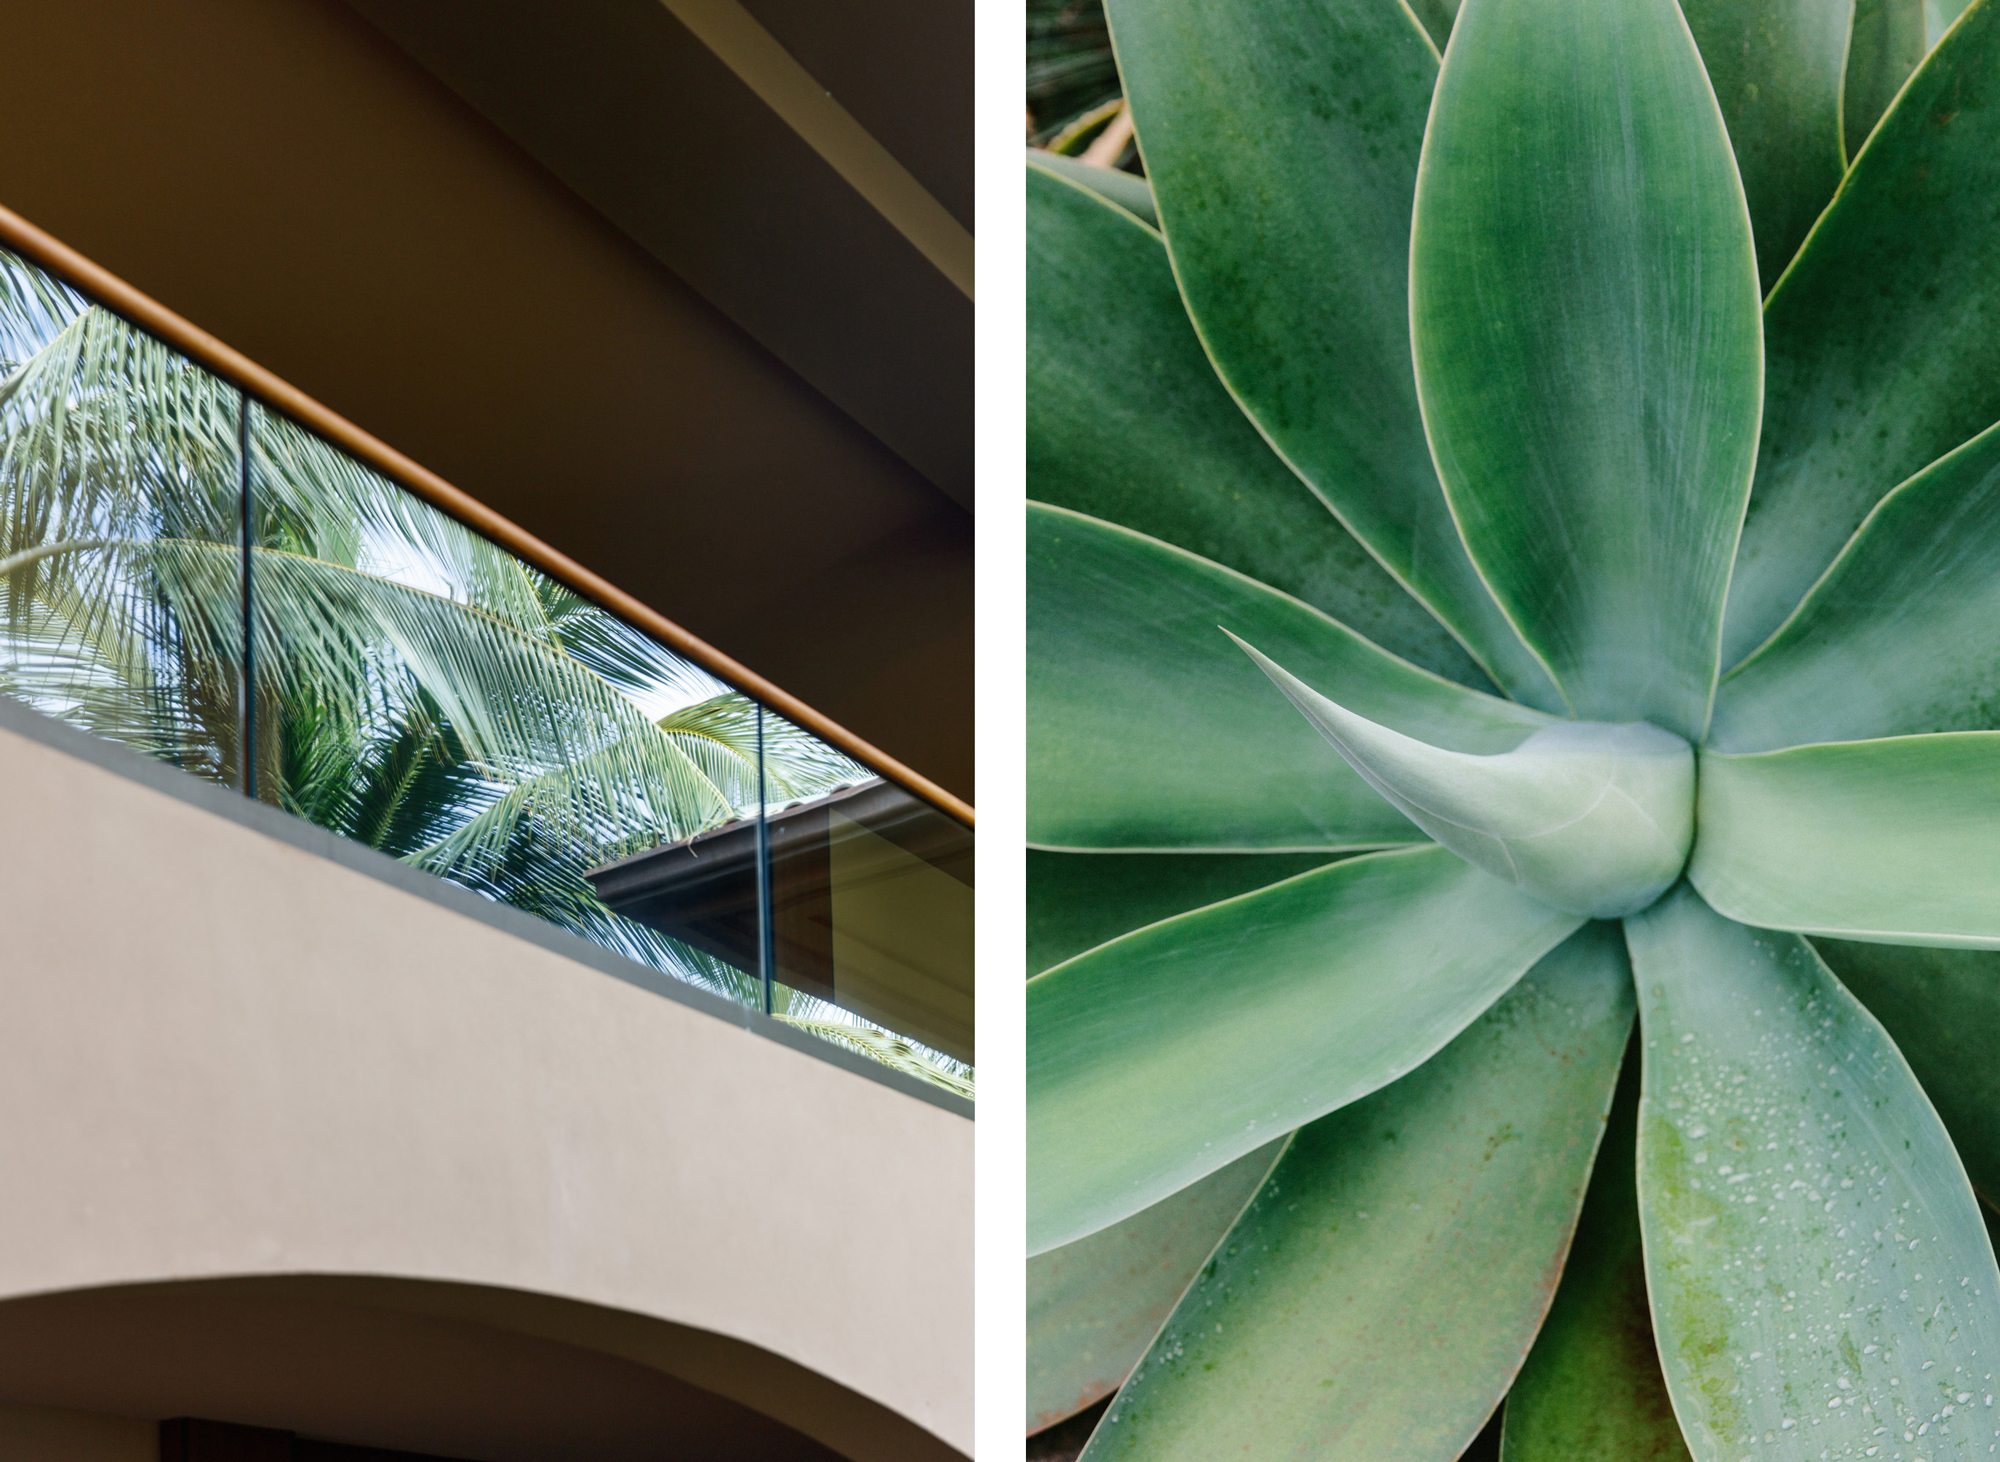 Lanai balcony with glass rail, aloe plant comparison